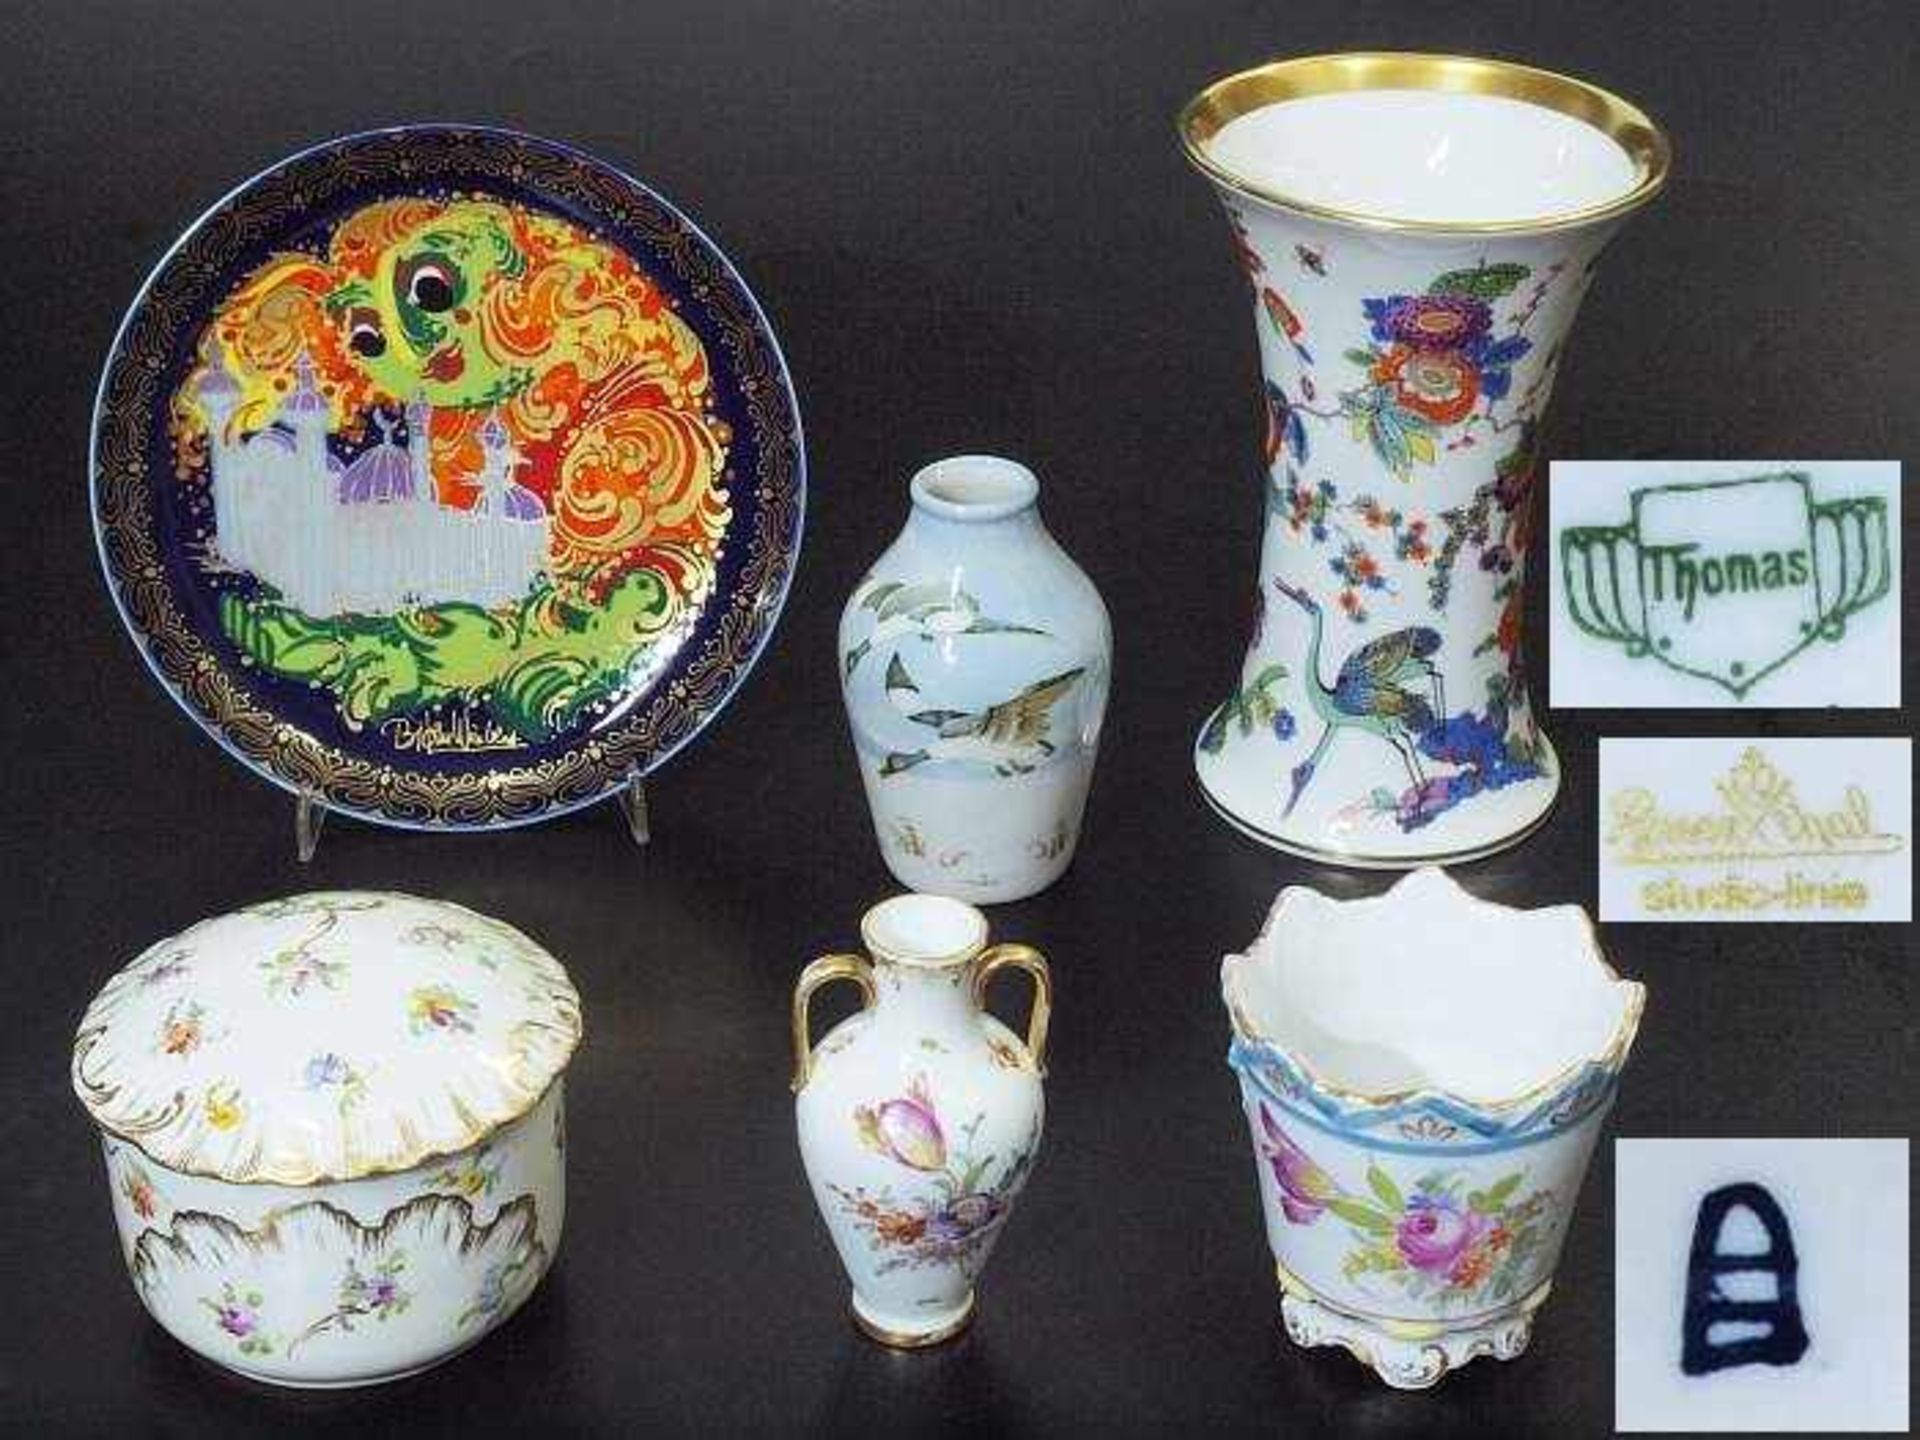 Sechs Teile Konvolut. Sechs Teile Konvolut. Bestehend aus: 1) Vase, Thomas Bavaria, farbige Bemalung